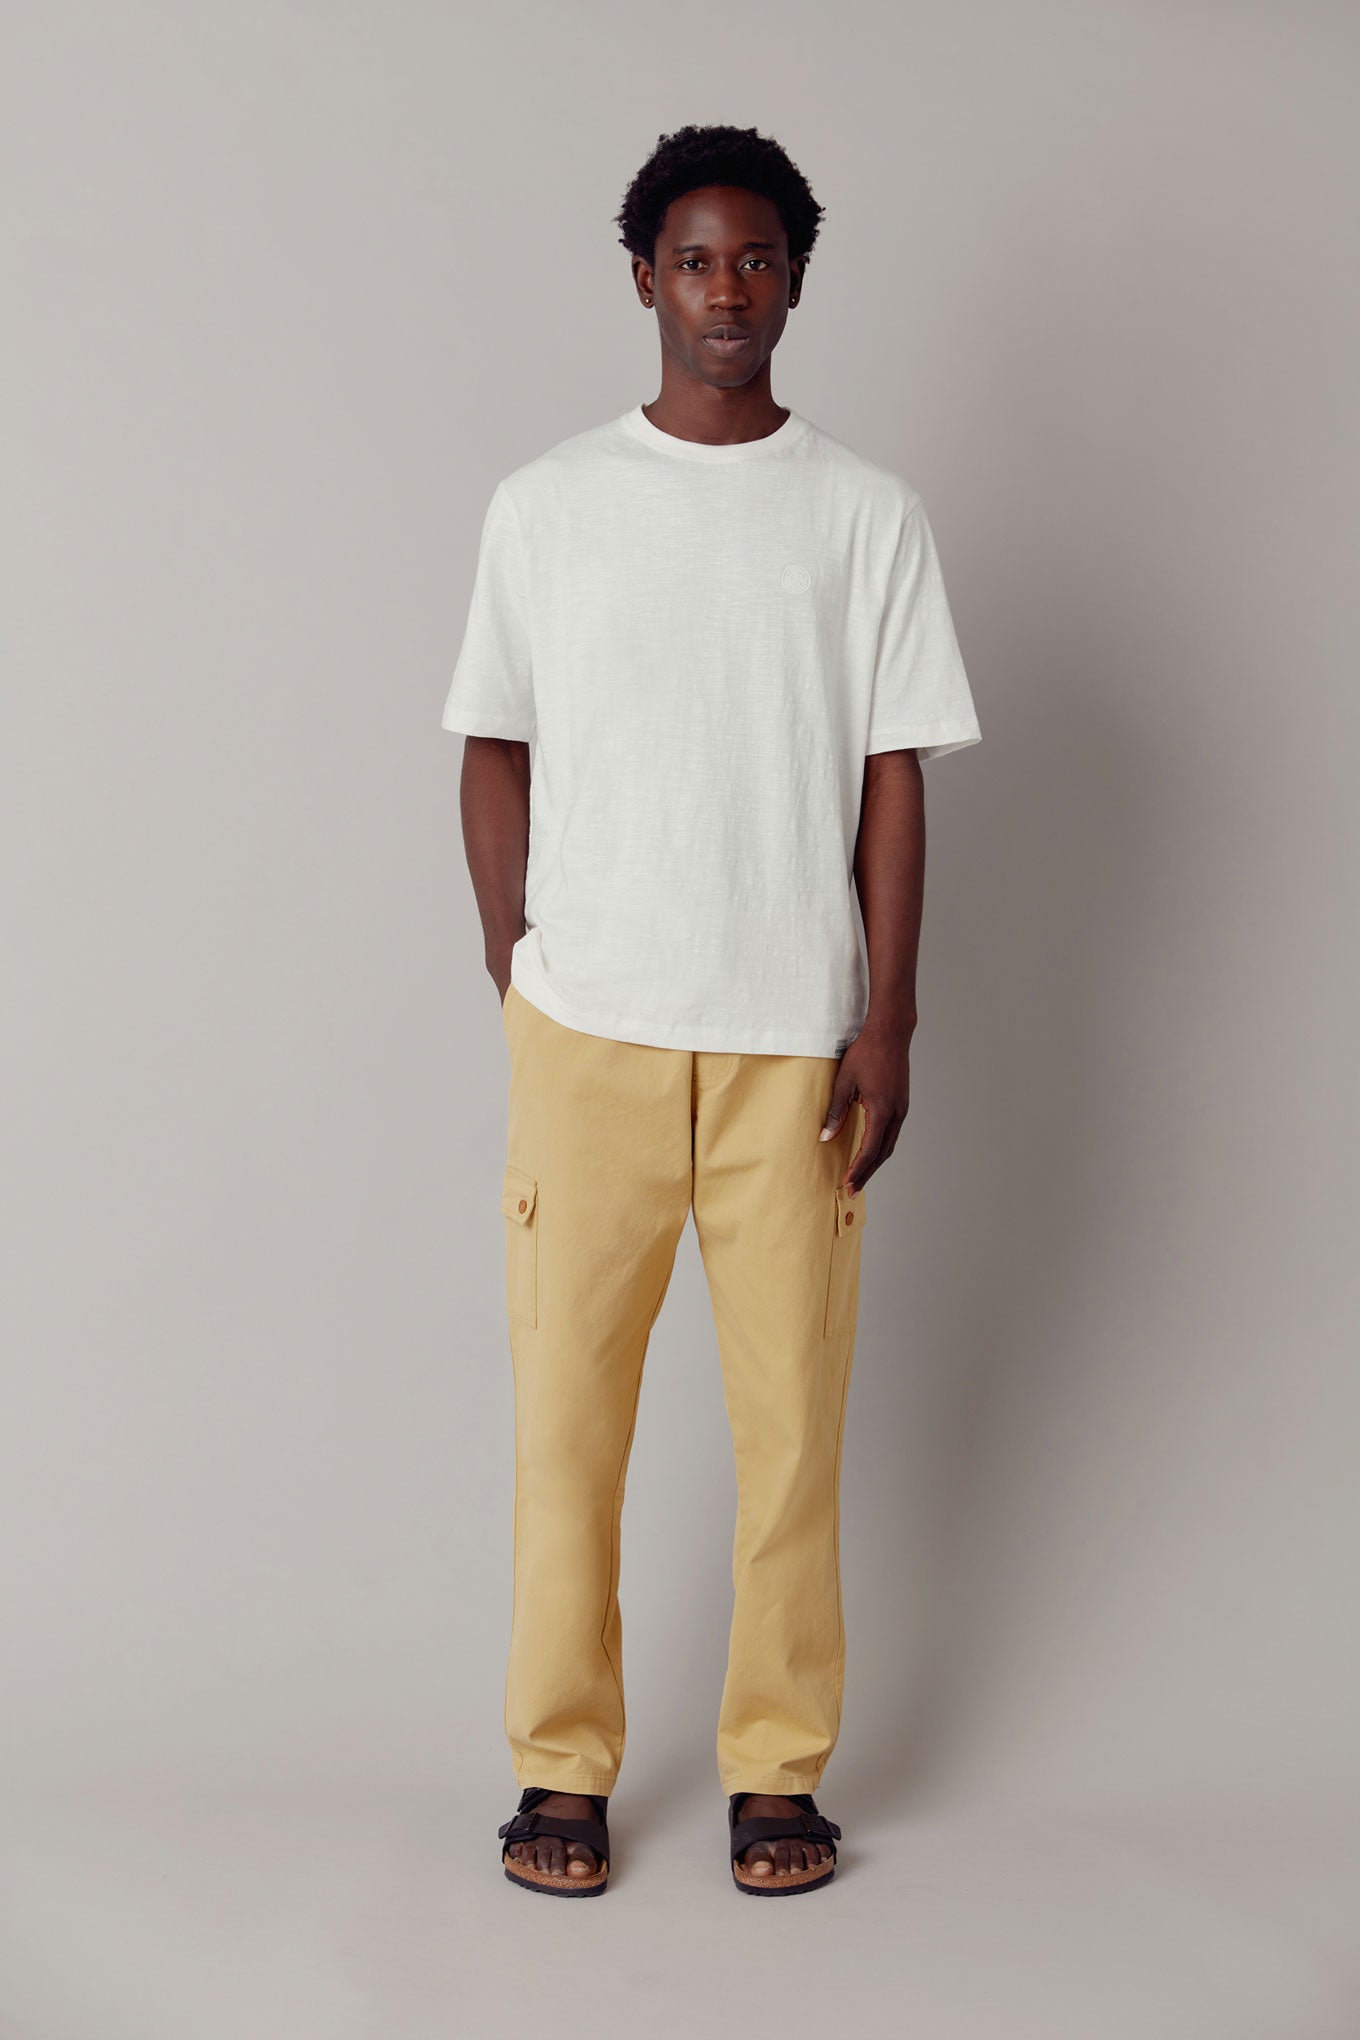 Pantalon Oscar beige en coton 100% biologique de Komodo